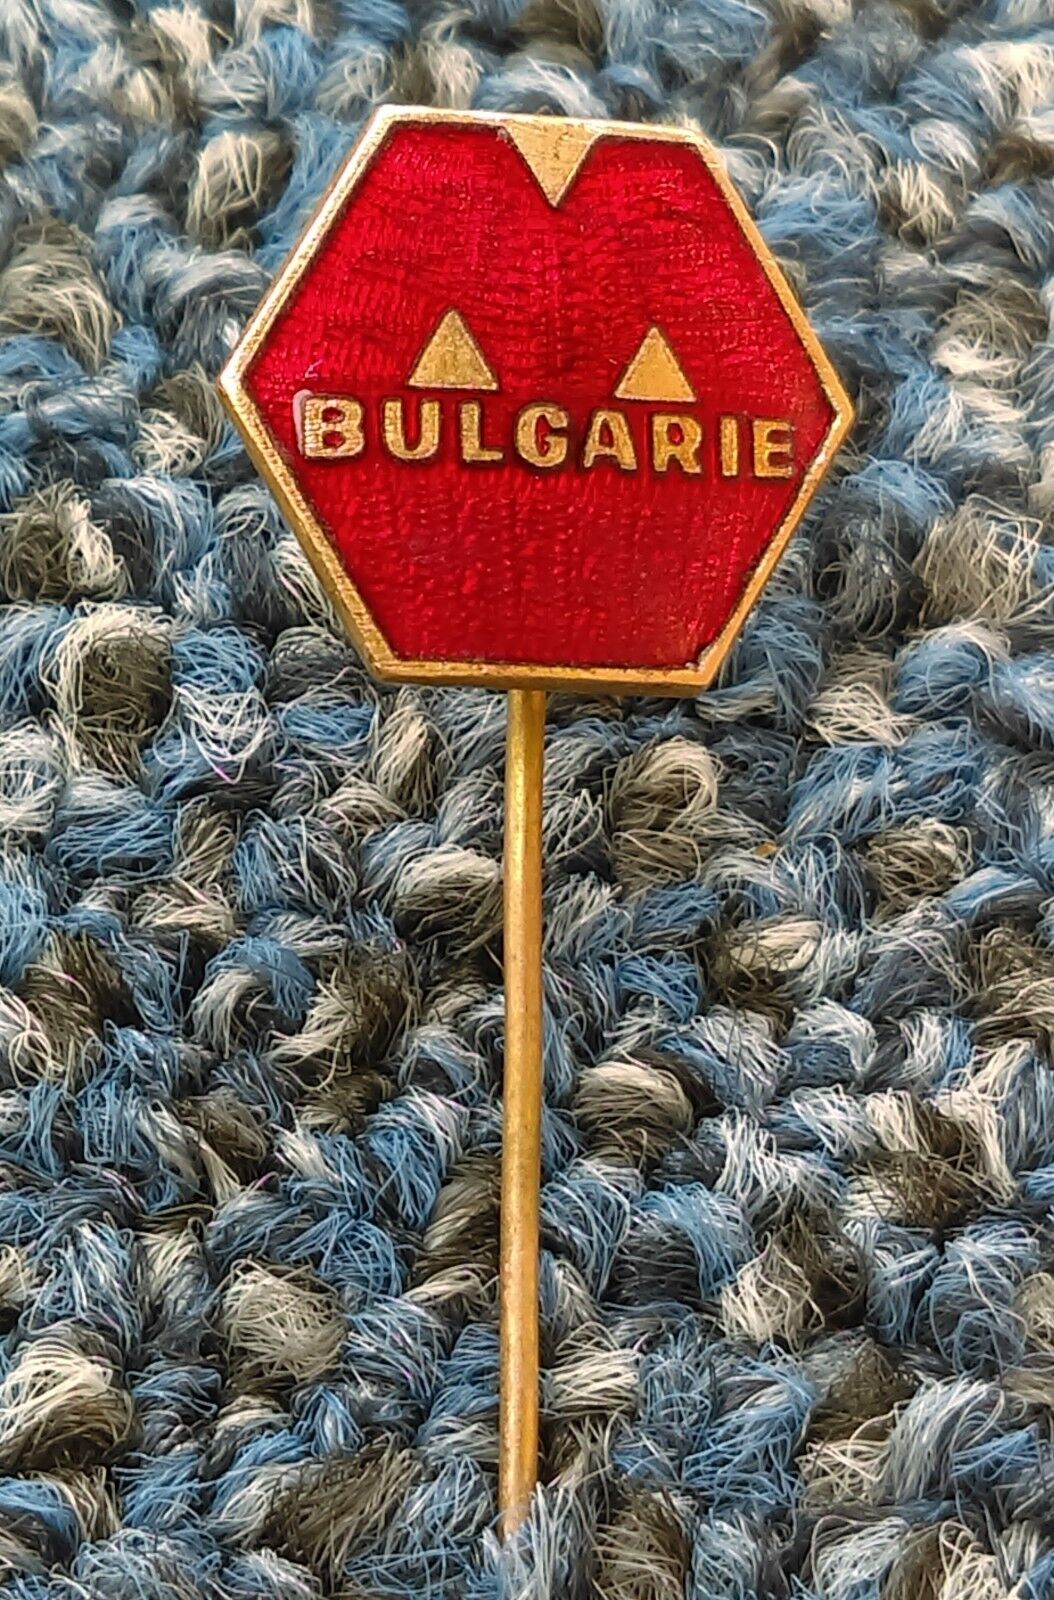 BULGARIE - vintage enamel pin badge anstecknadel, antique pin, badge, very rarre